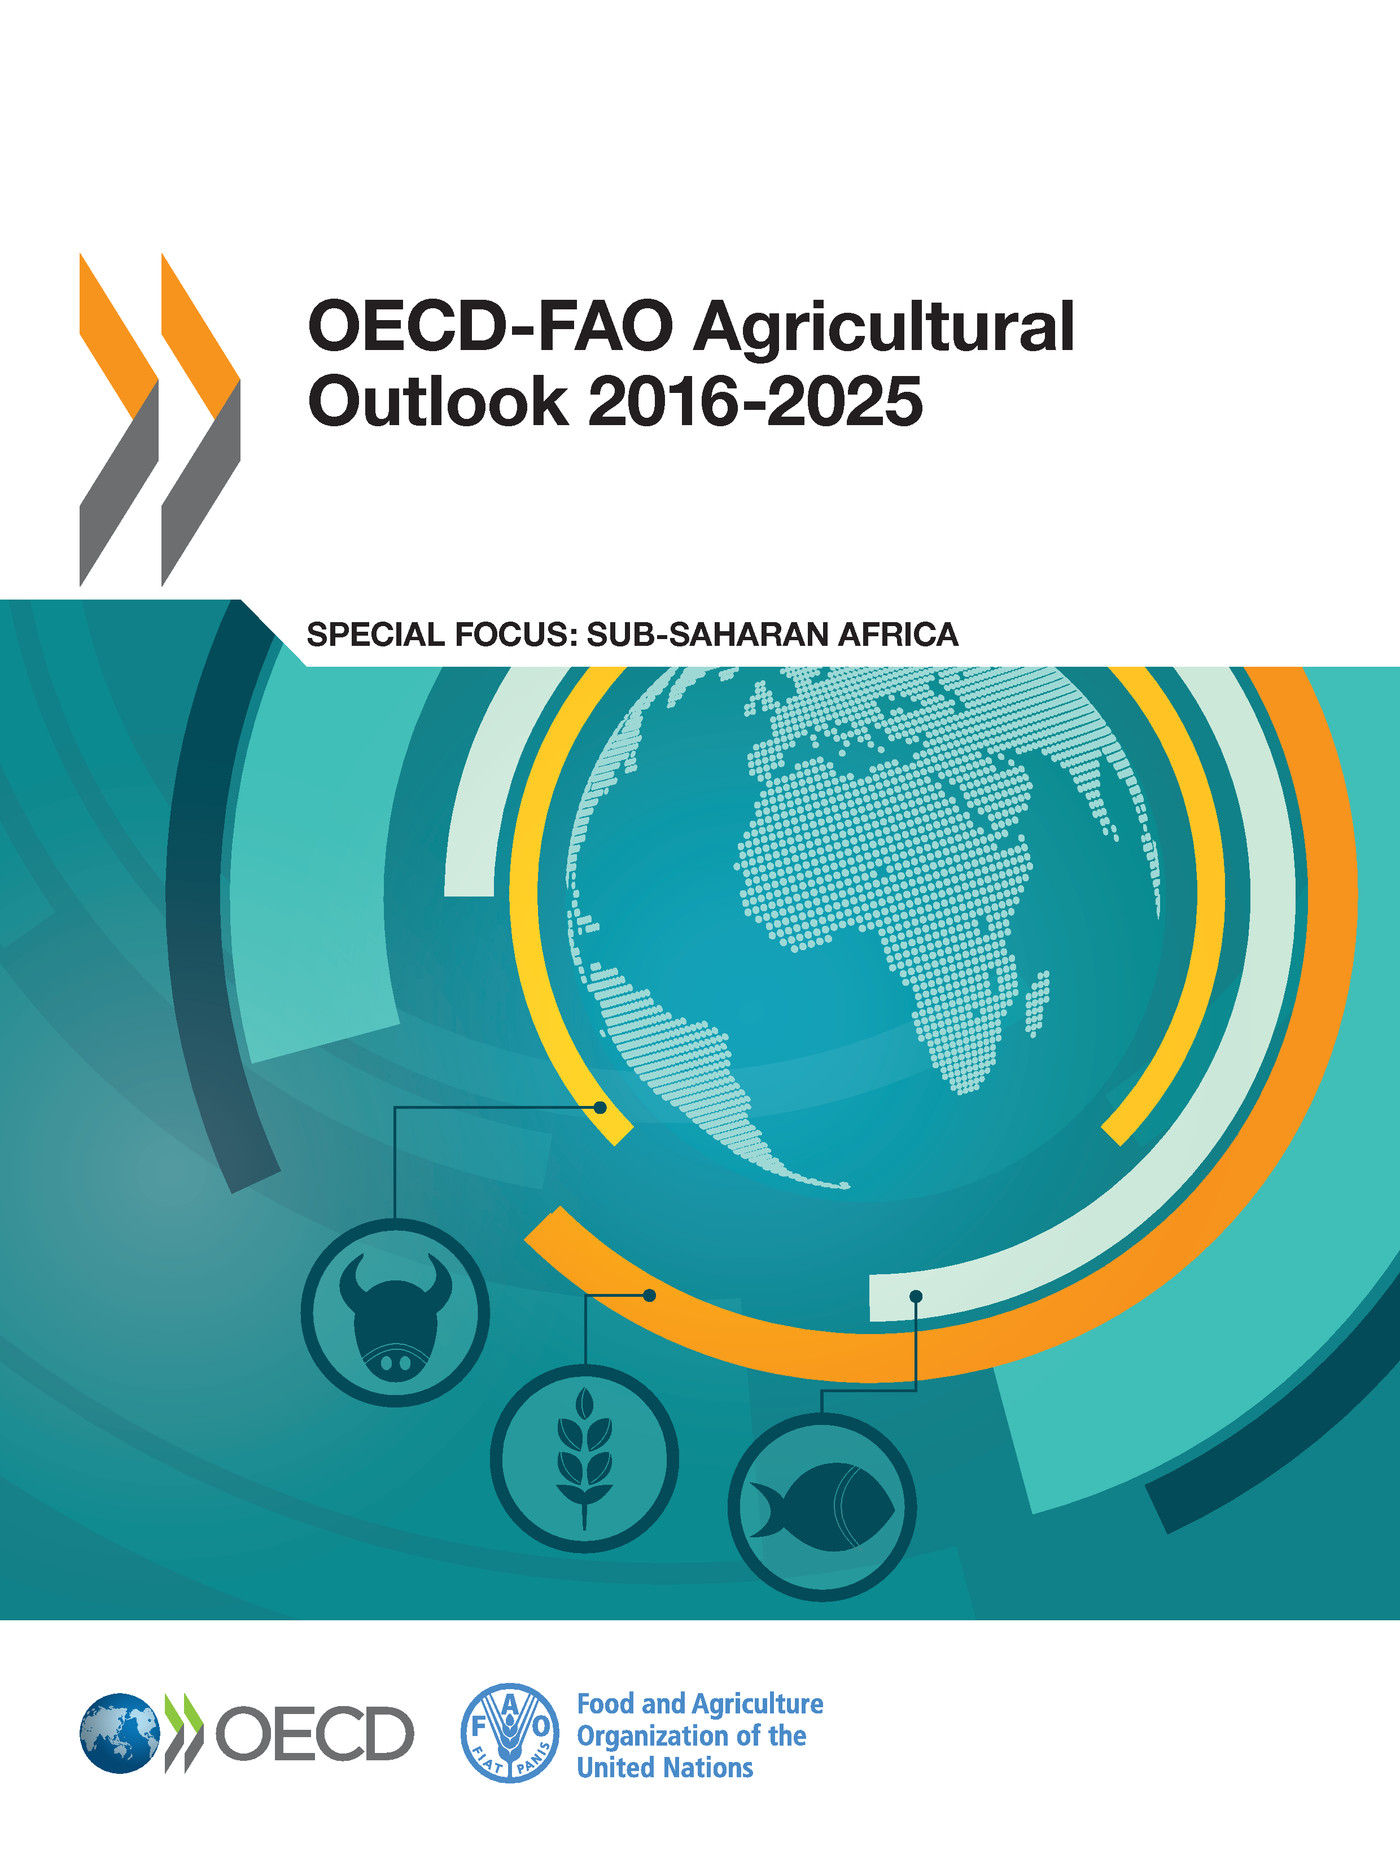 OECD-FAO Agricultural Outlook 2016-2025 -  Collectif - OCDE / OECD